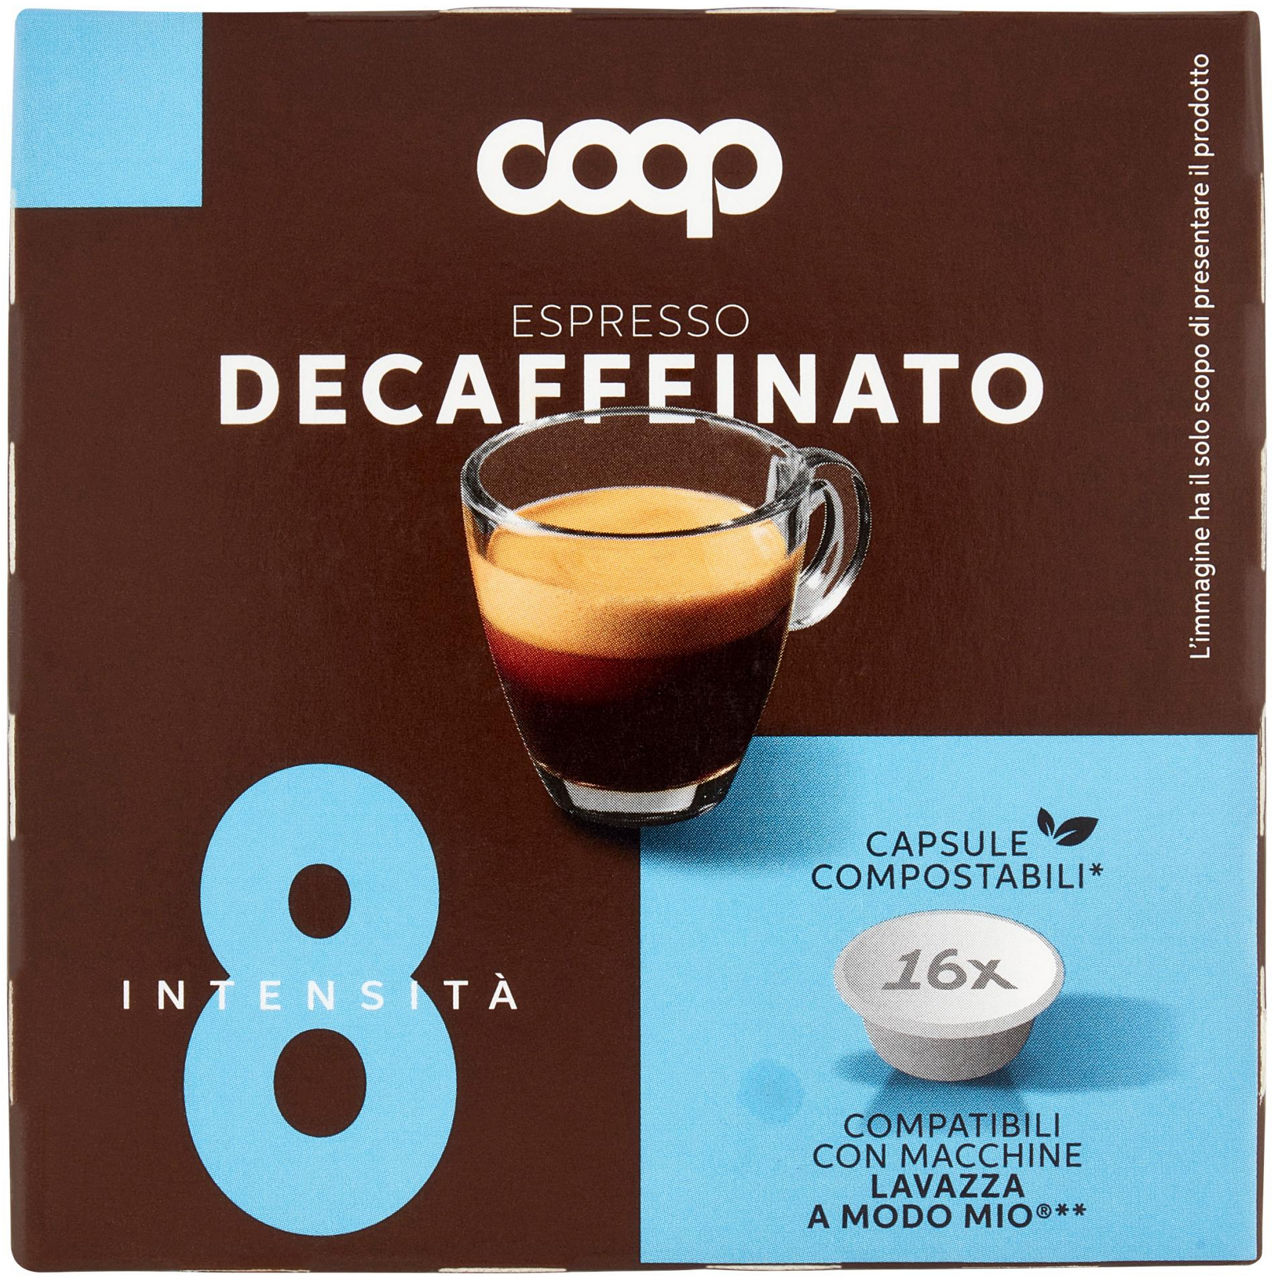 Caffe' capsule compatibili a modo mio coop miscela deca pz 16x7,5g g 120